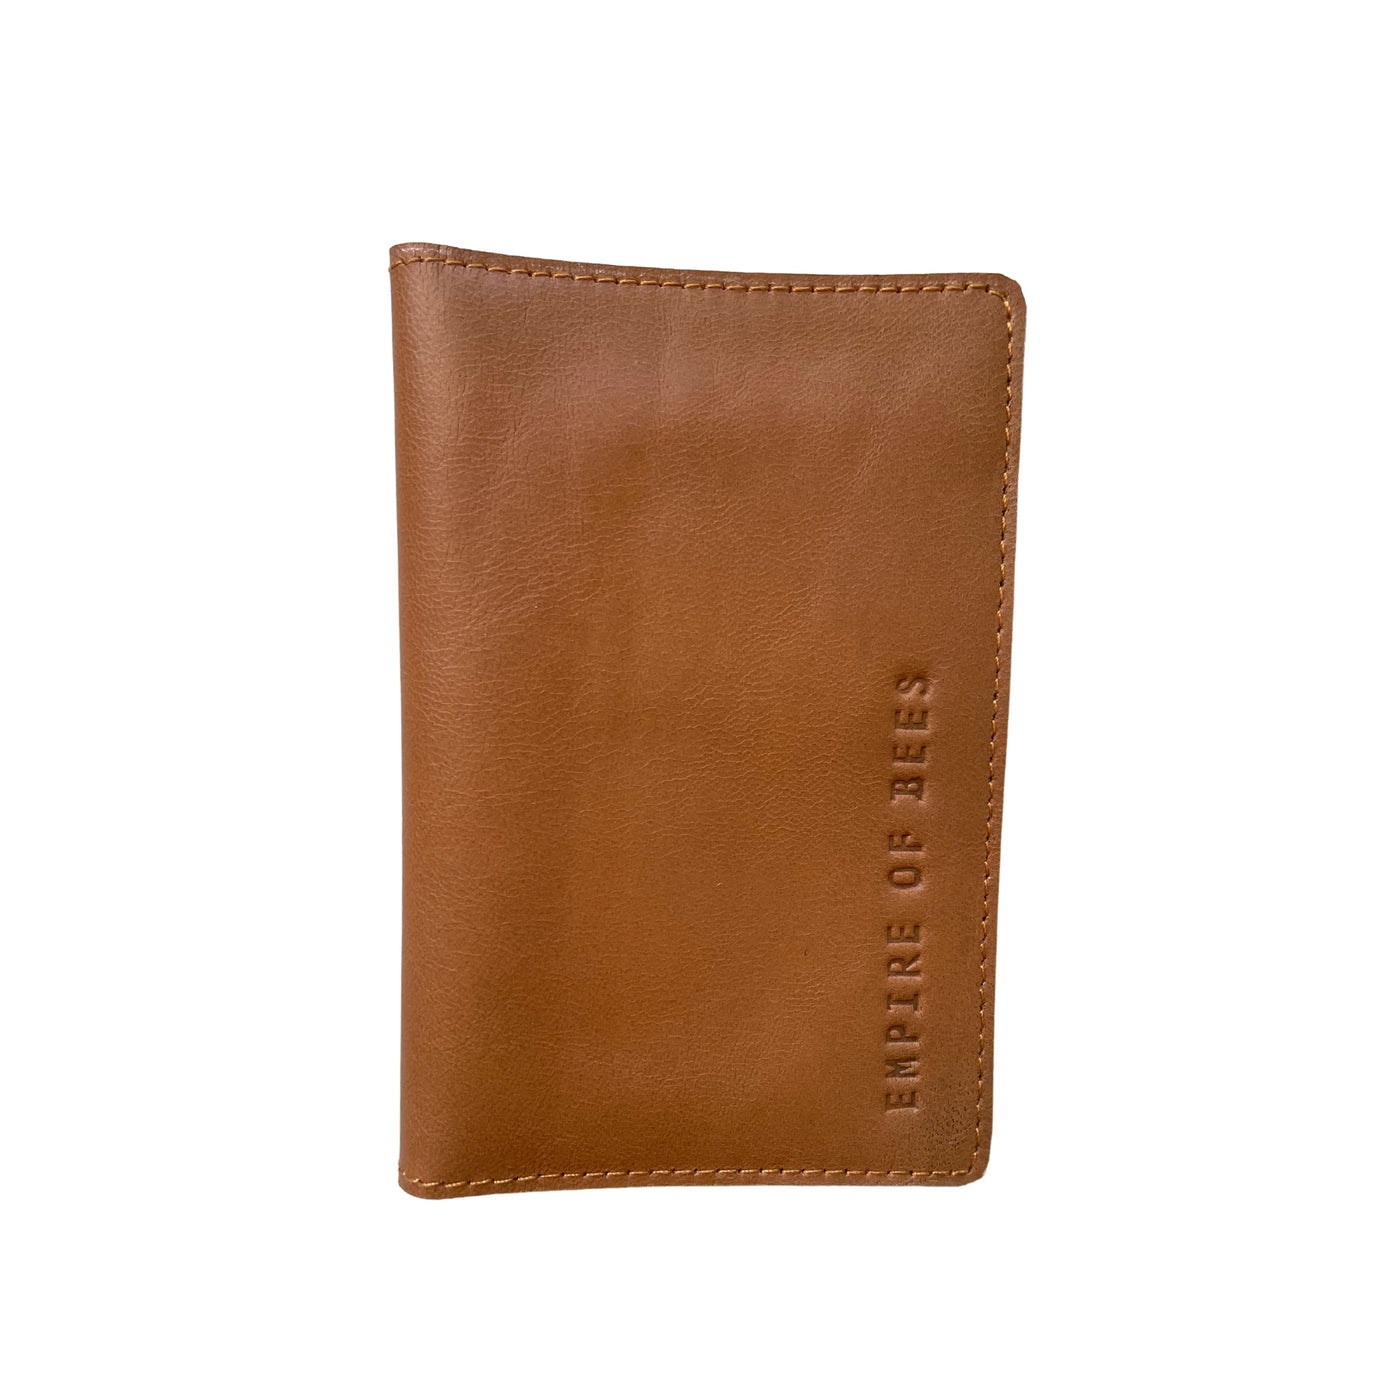 Tan Leather Passport Wallet